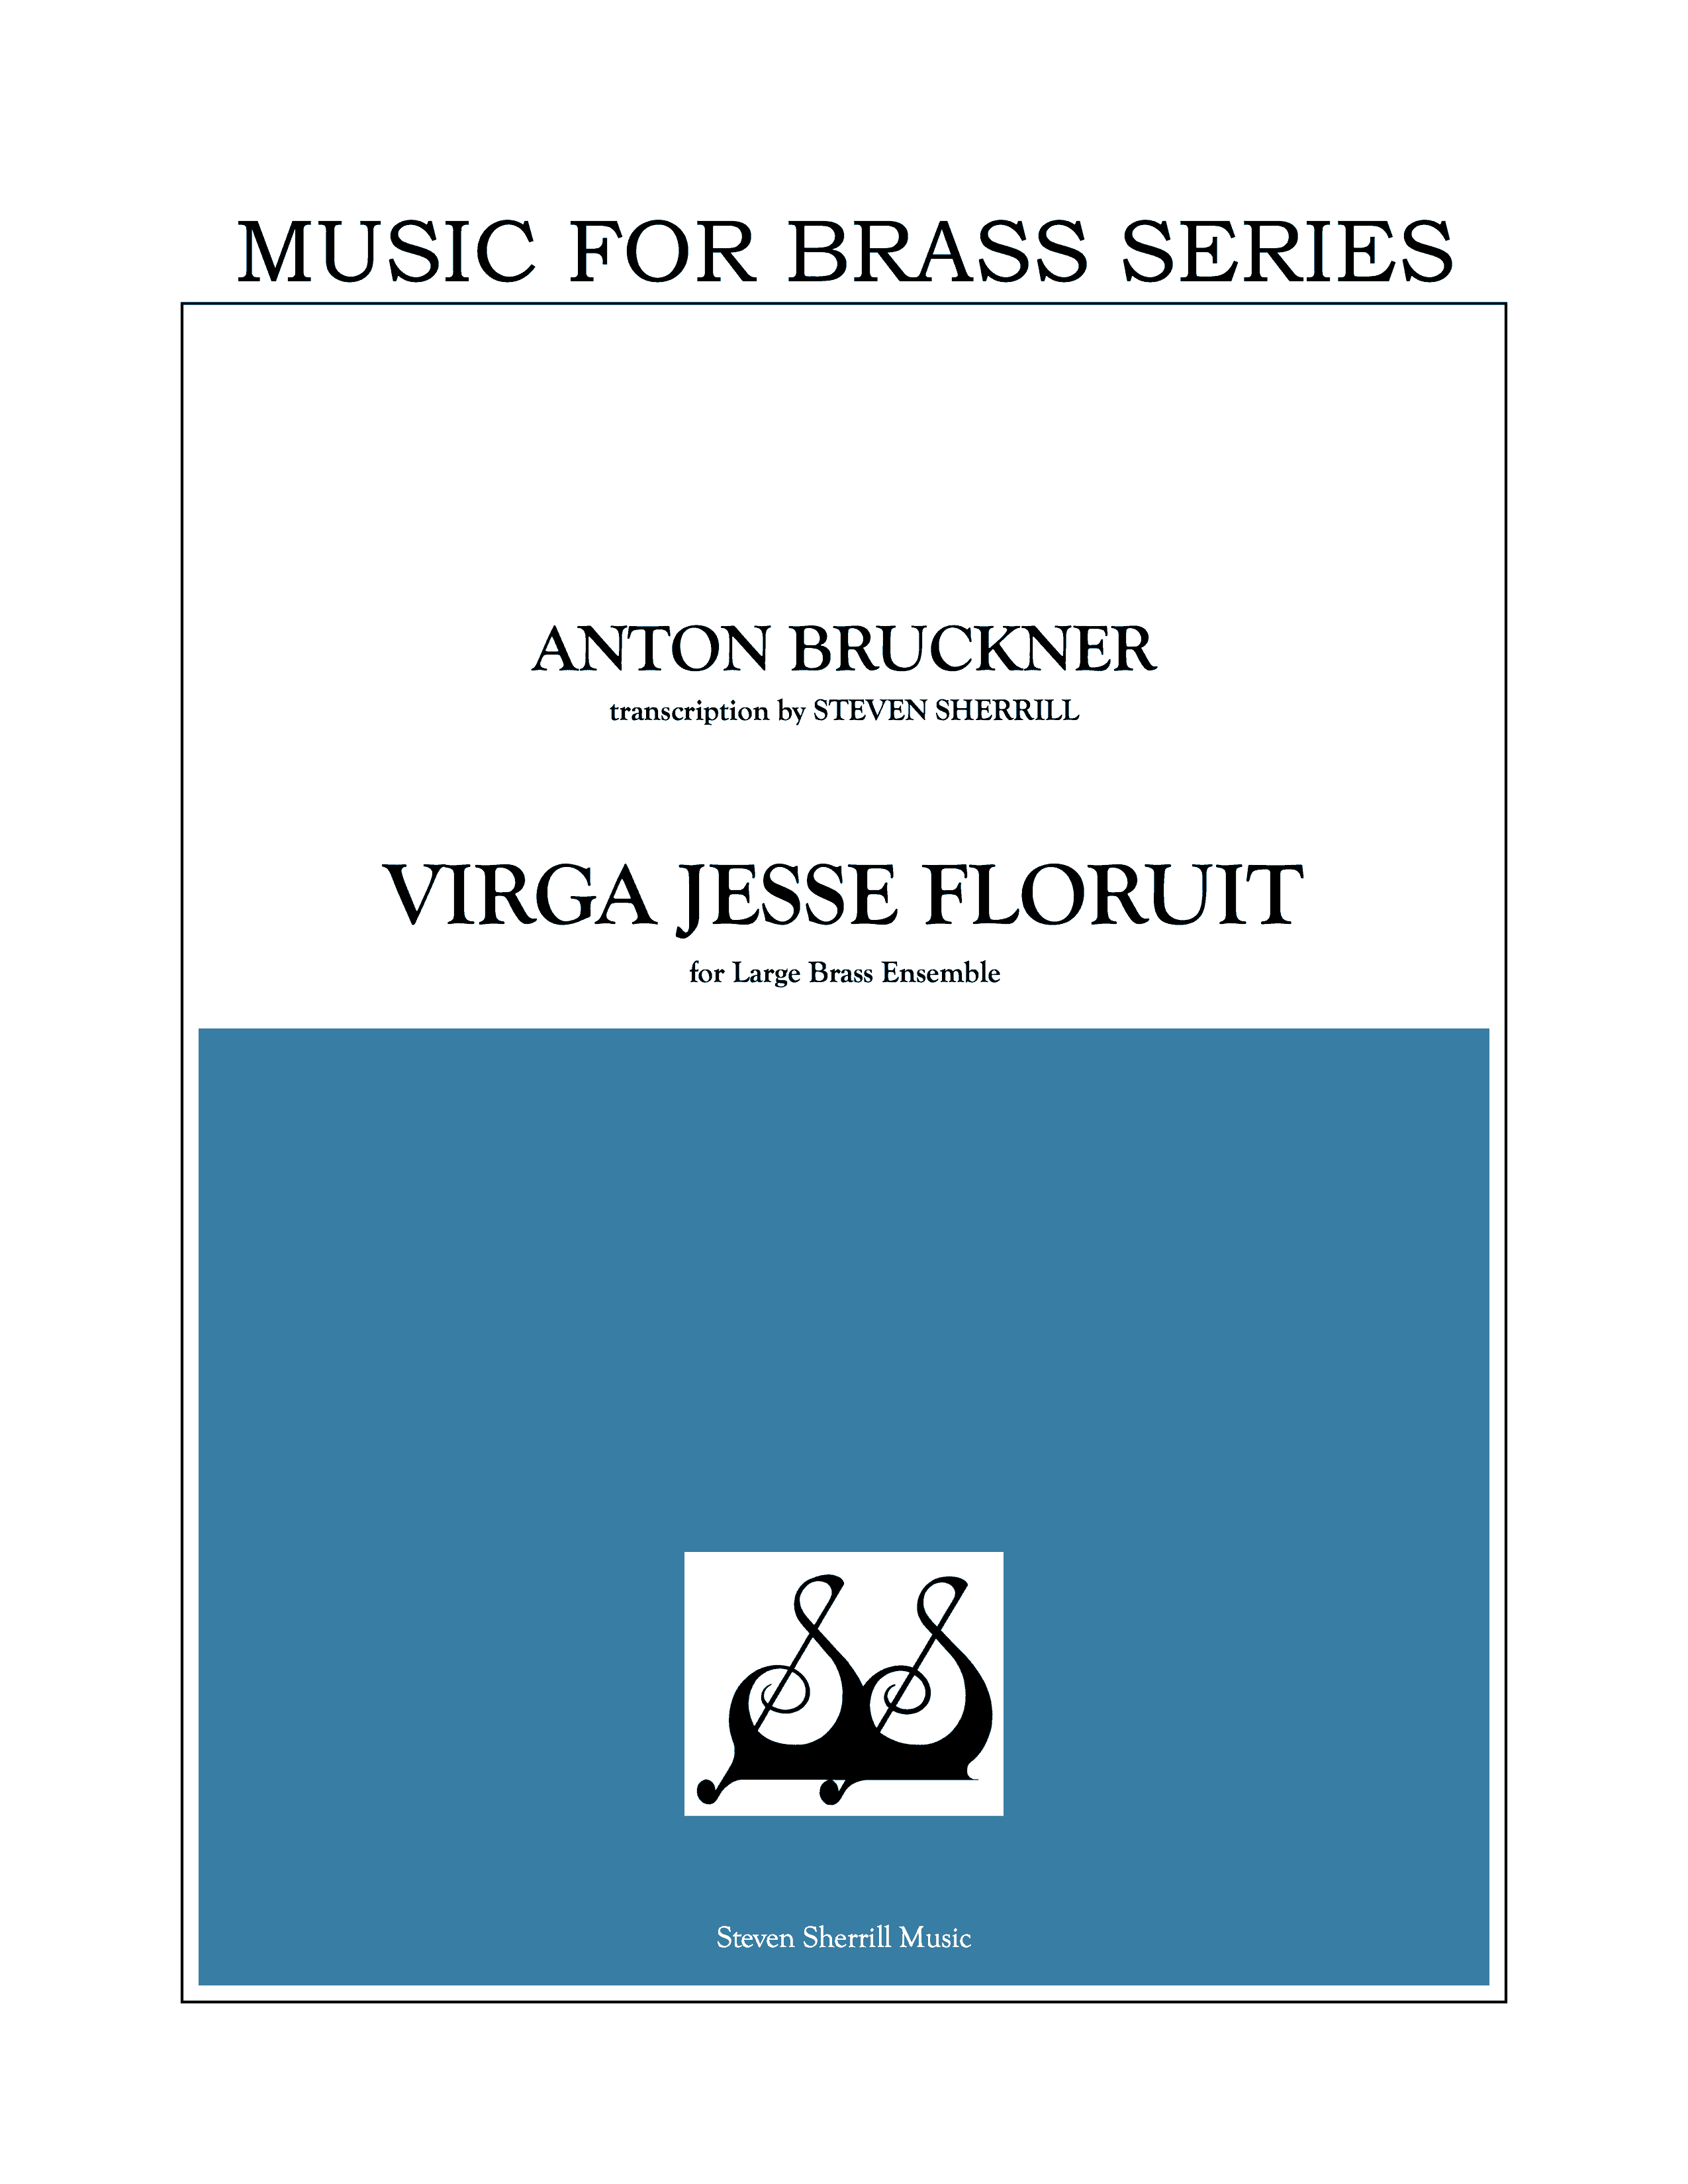 Virga Jesse Floruit cover page